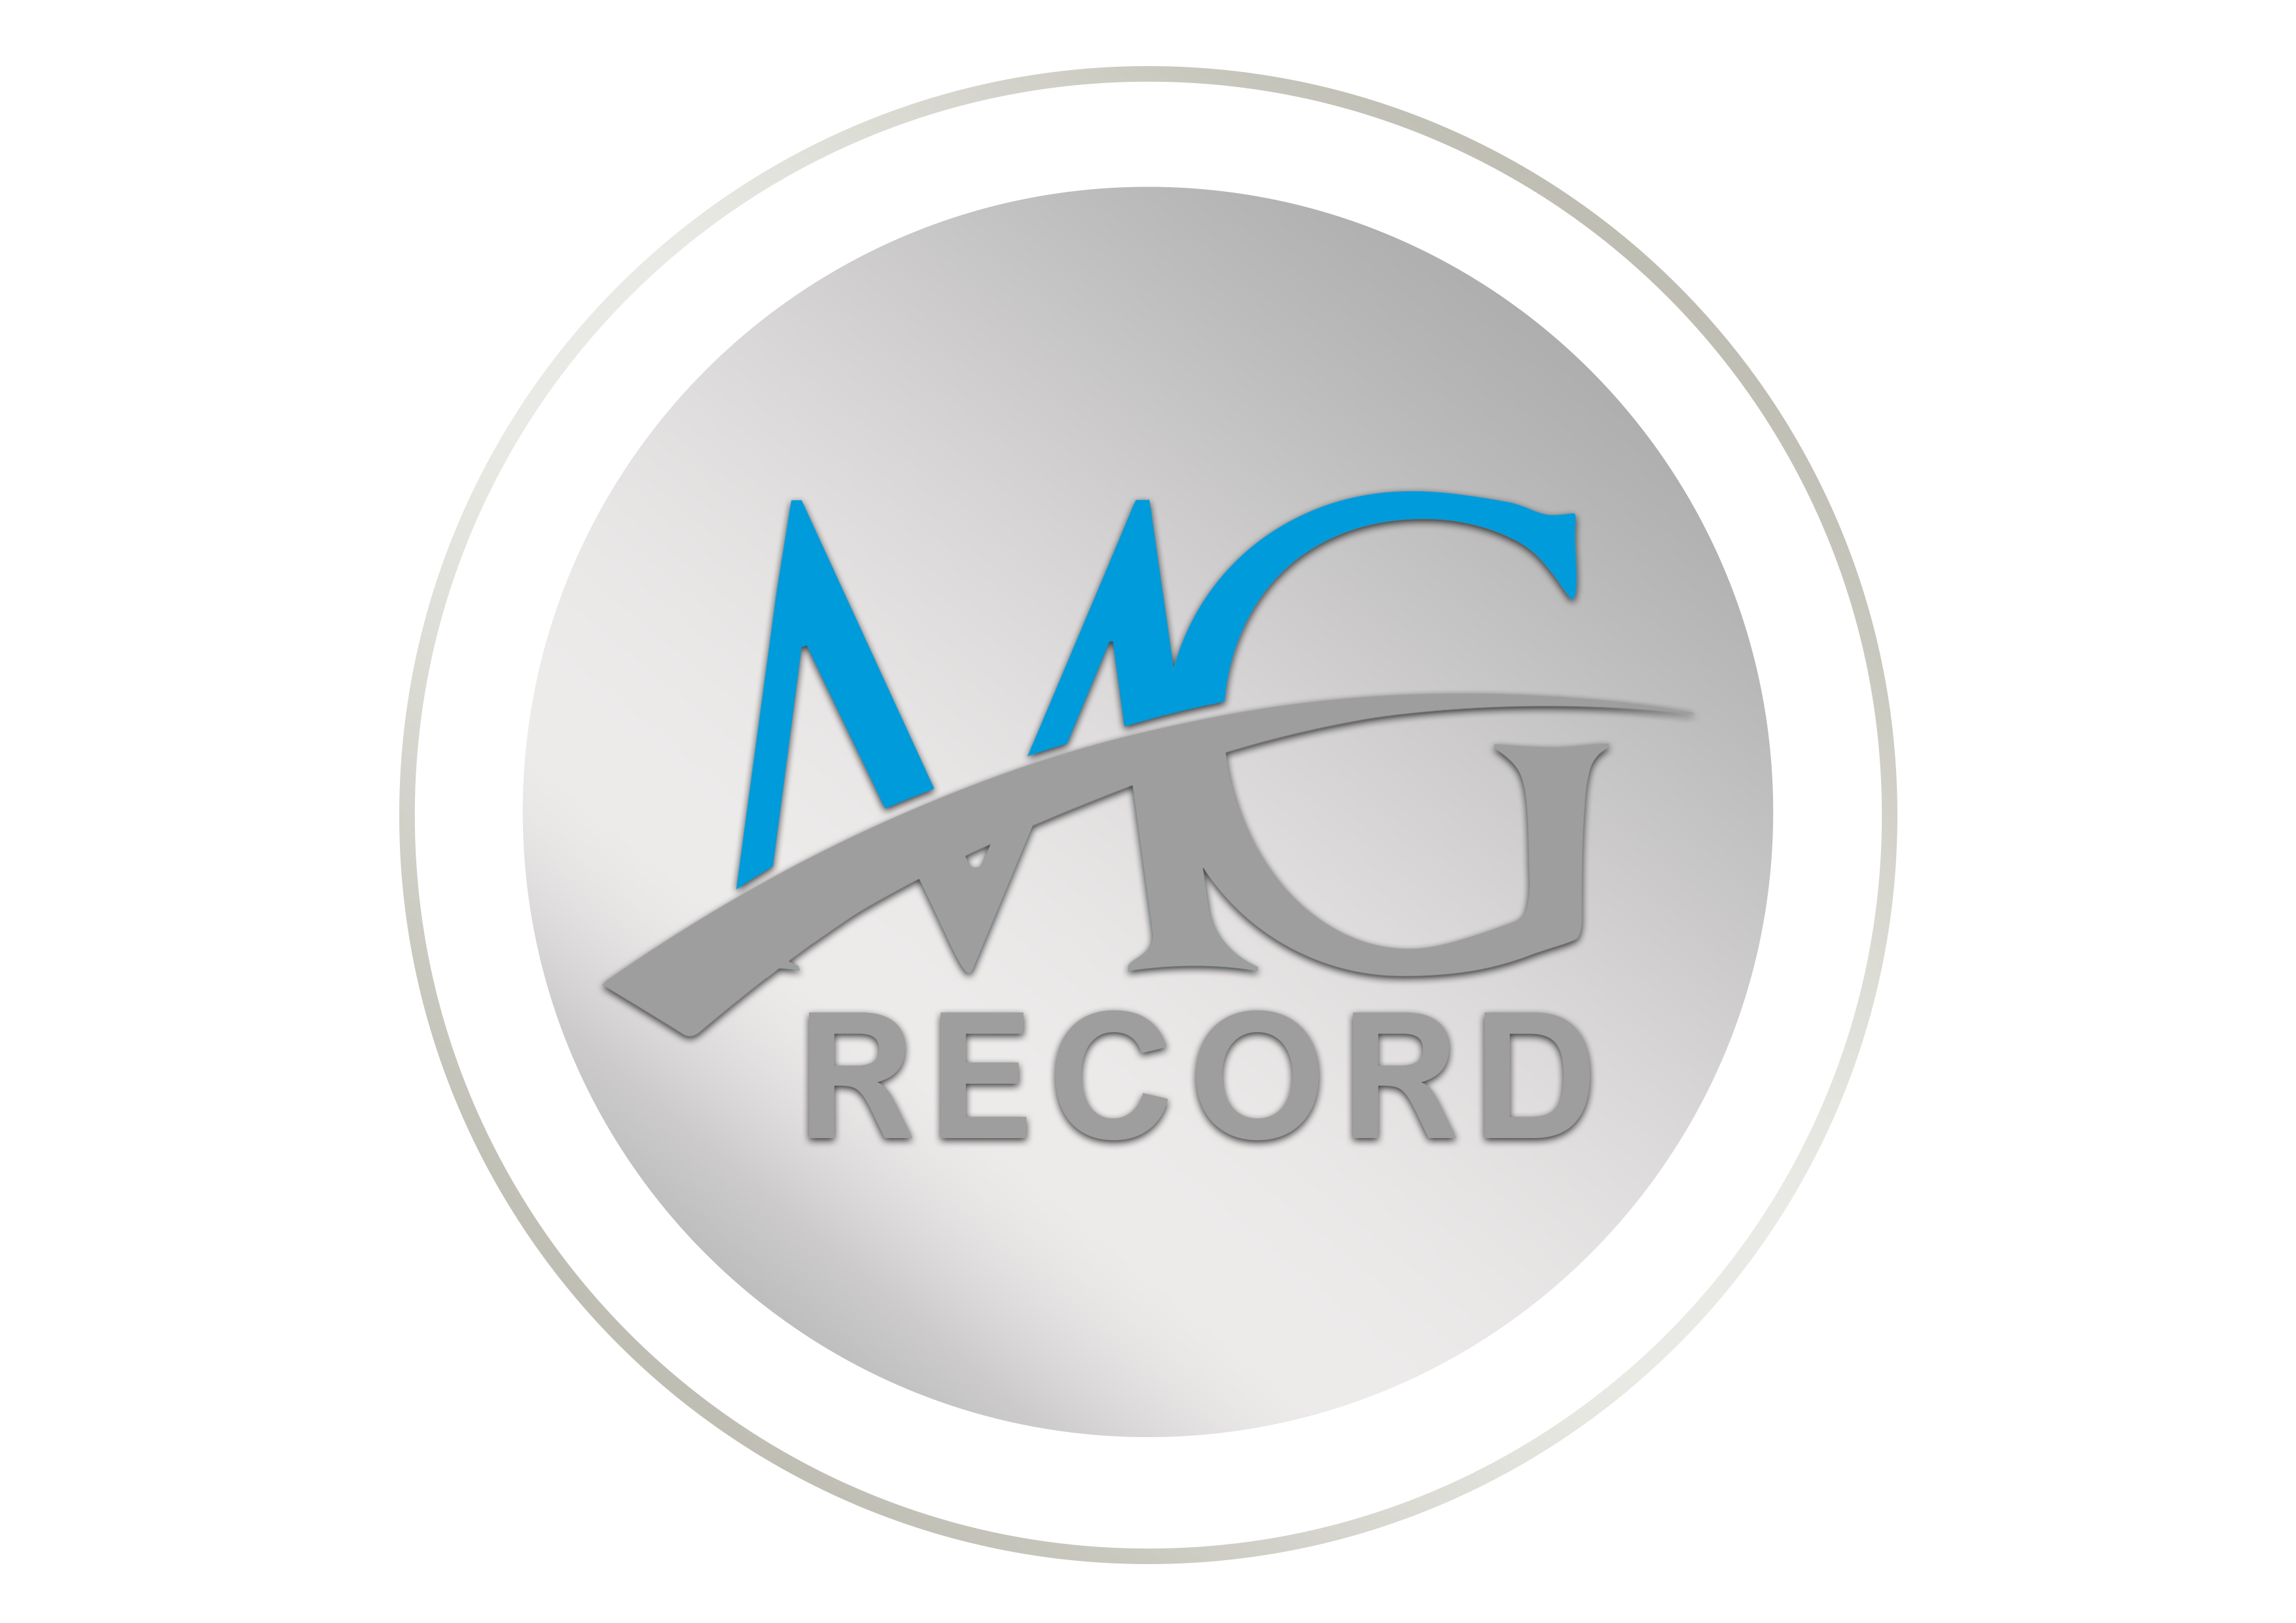 MG Records